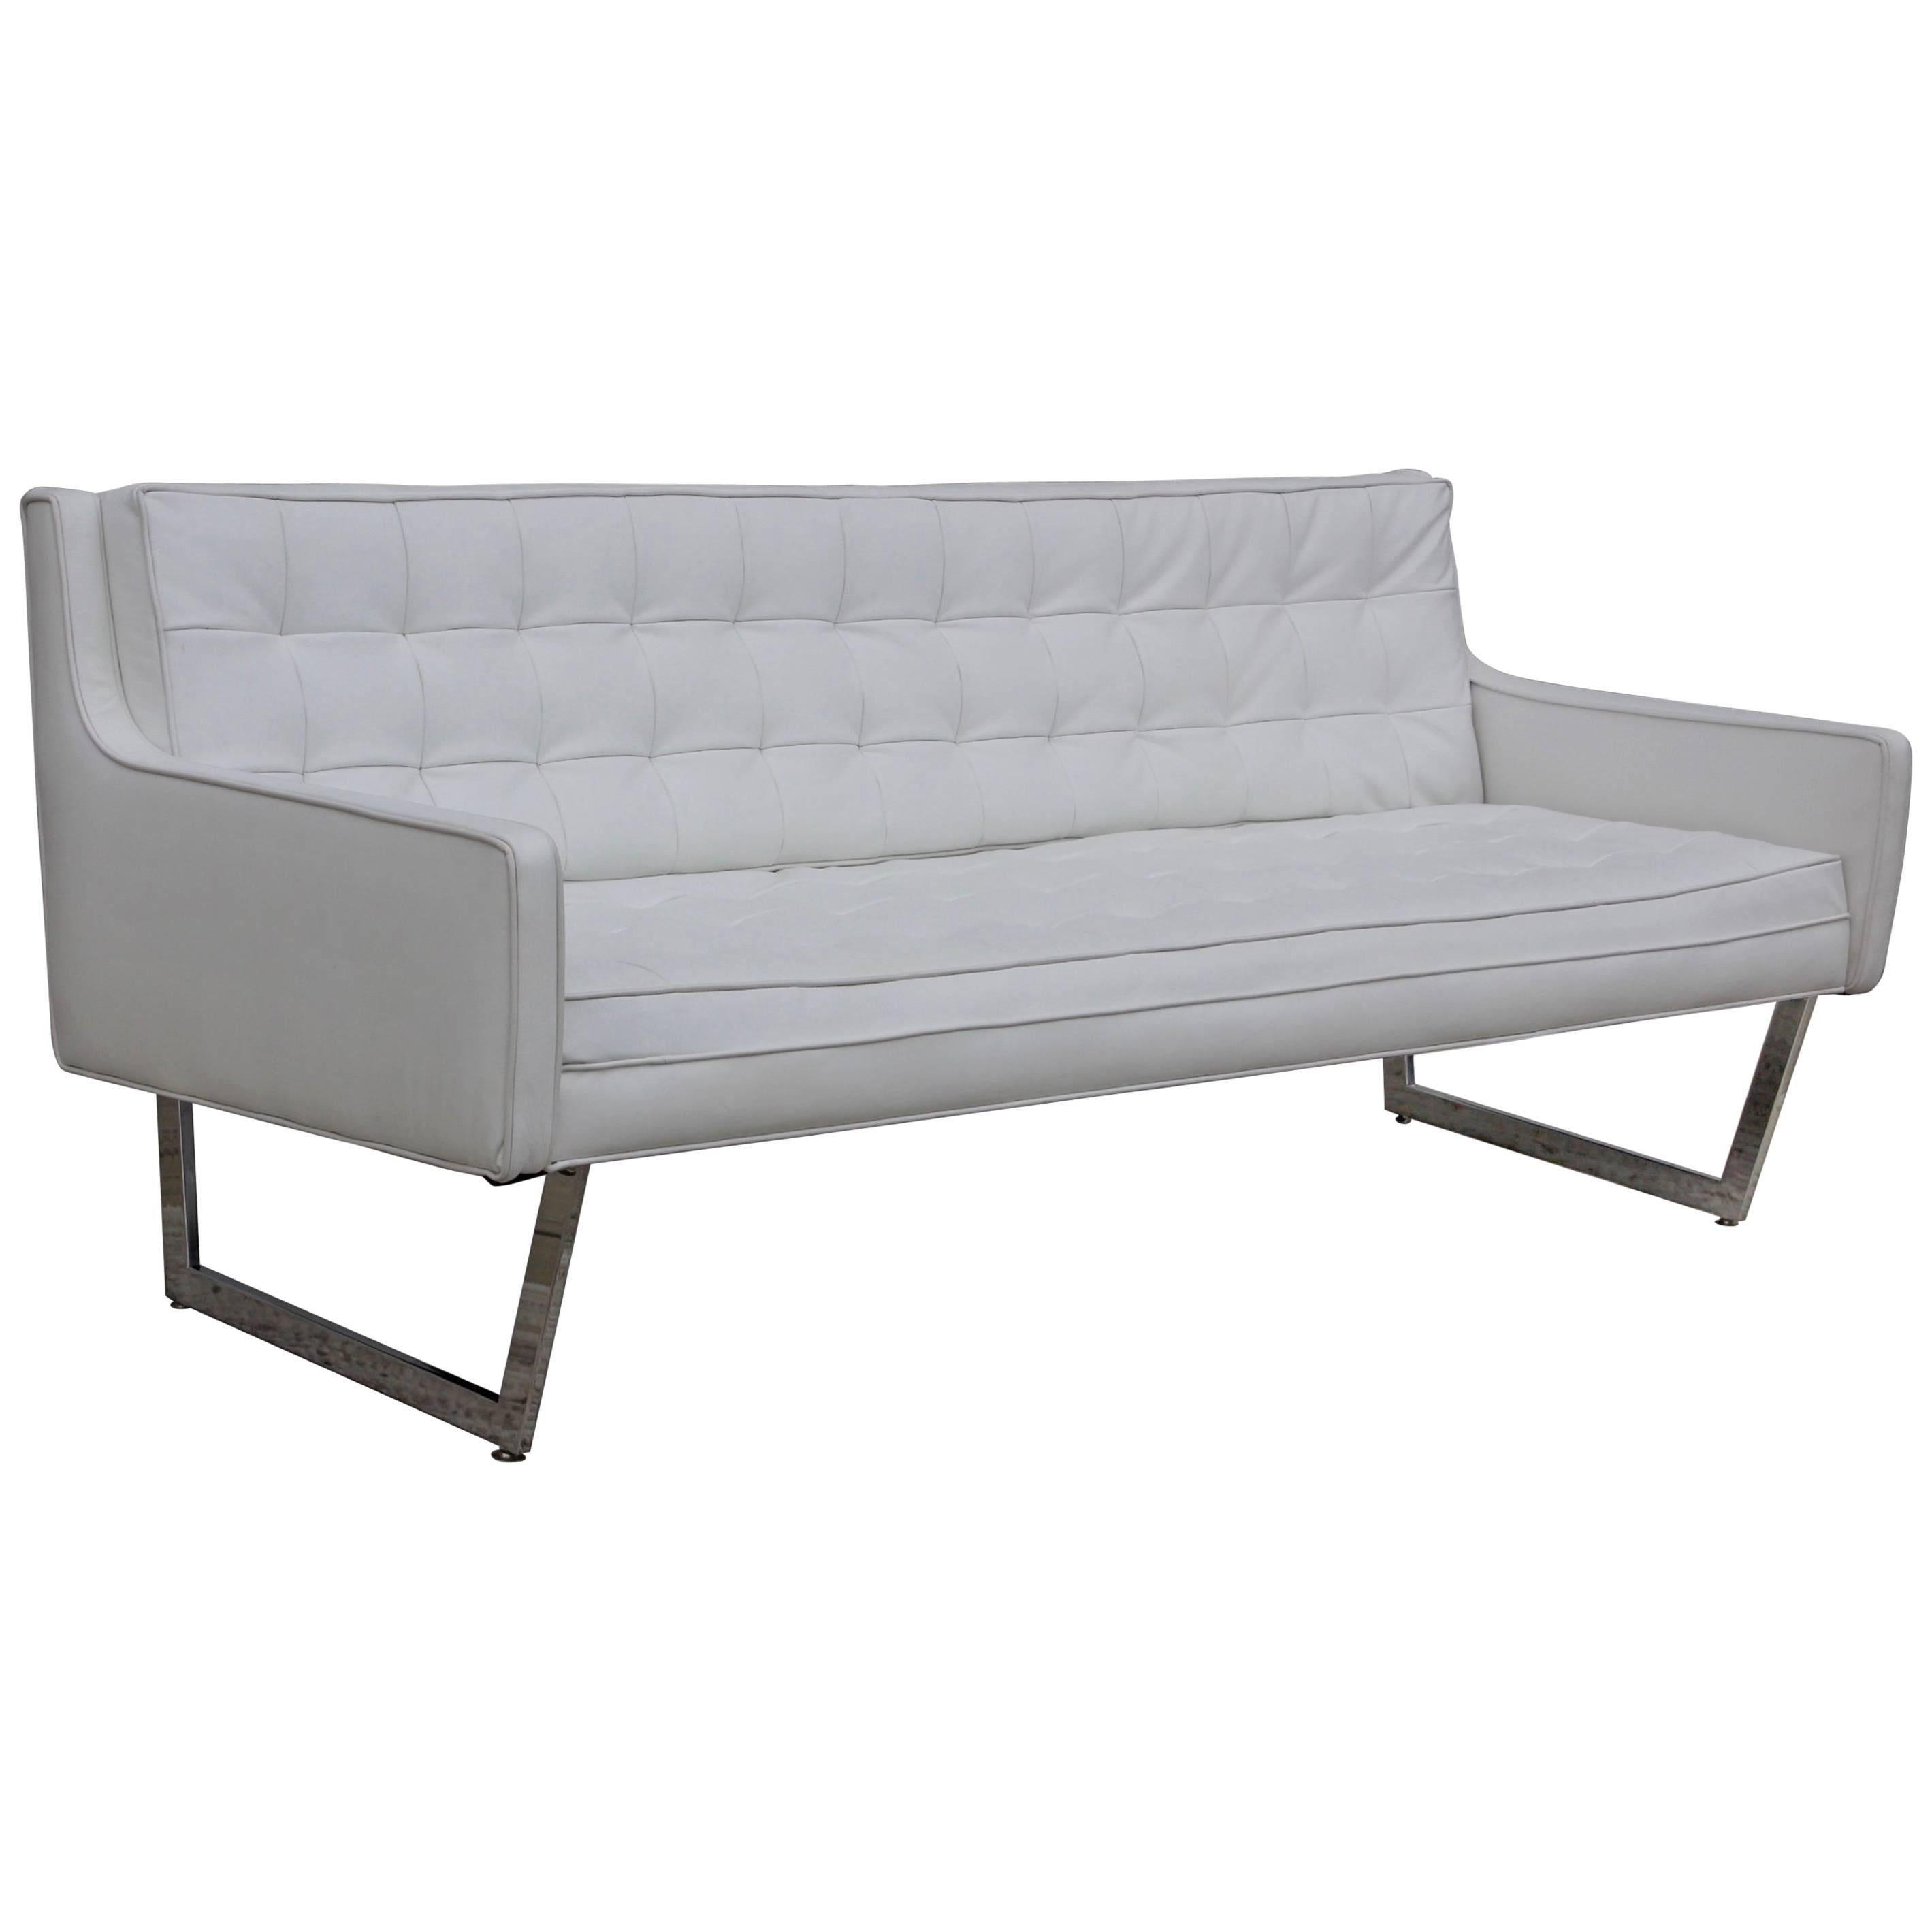 Patrician Furniture Leather And Chrome Sofa